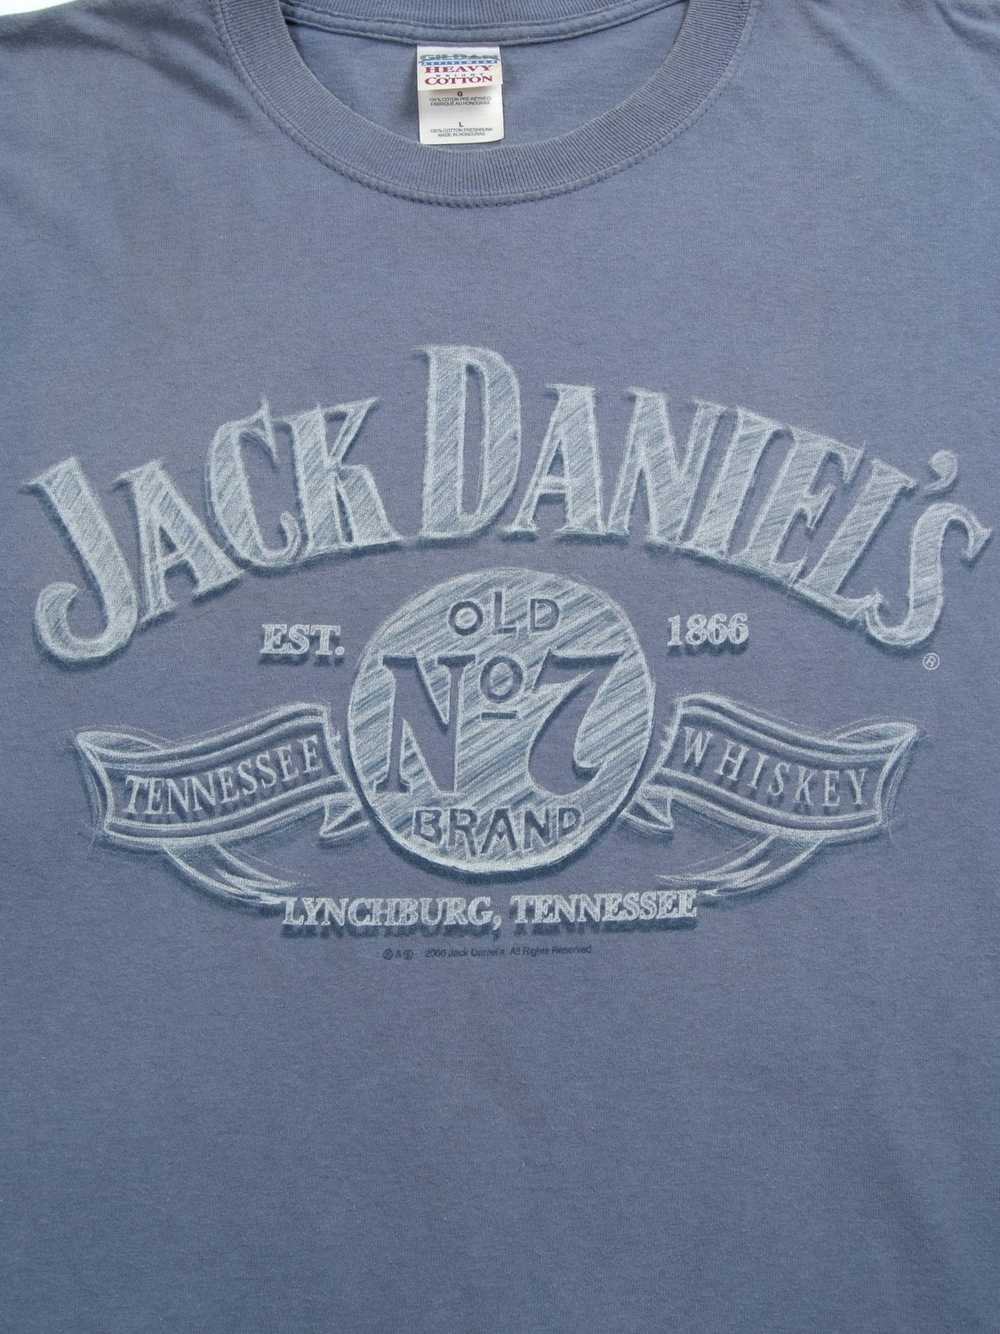 Jack Daniels Lounge ￼T Shirt Vintage 1970s Single Stitch Black Large Rare  Tag